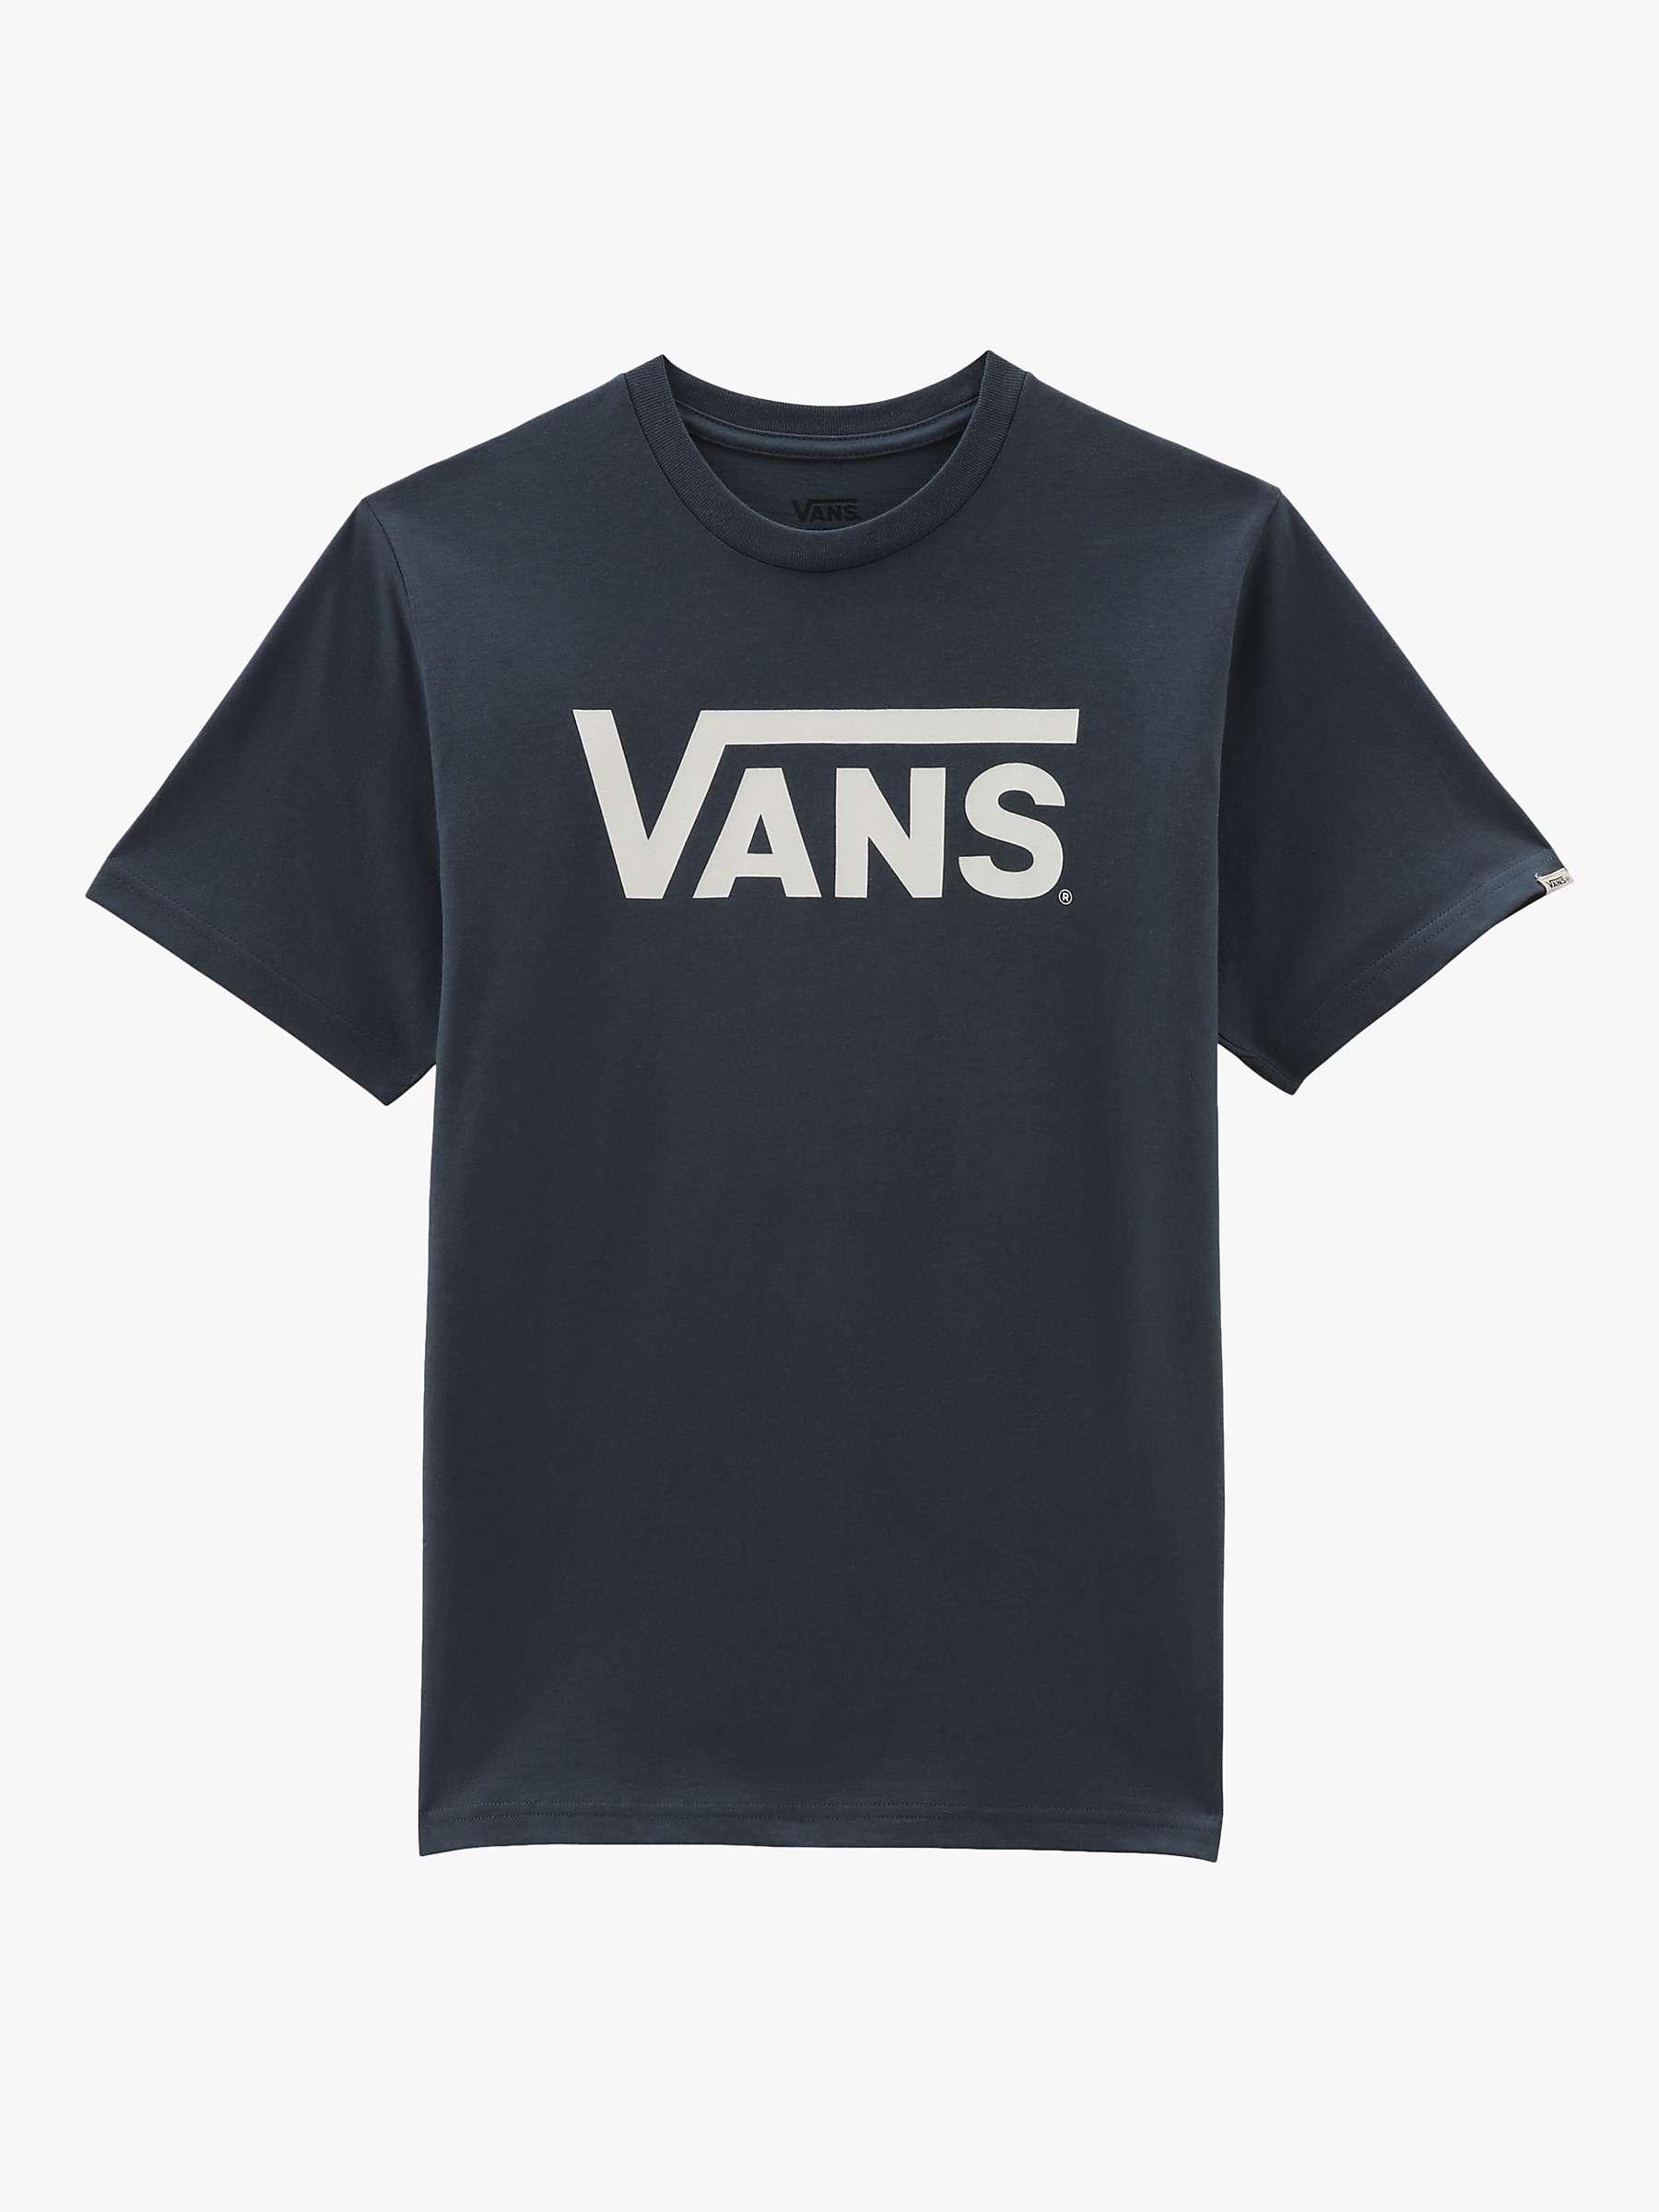 Buy Vans Kids' Off The Wall Logo T-Shirt, Black/White Online at johnlewis.com